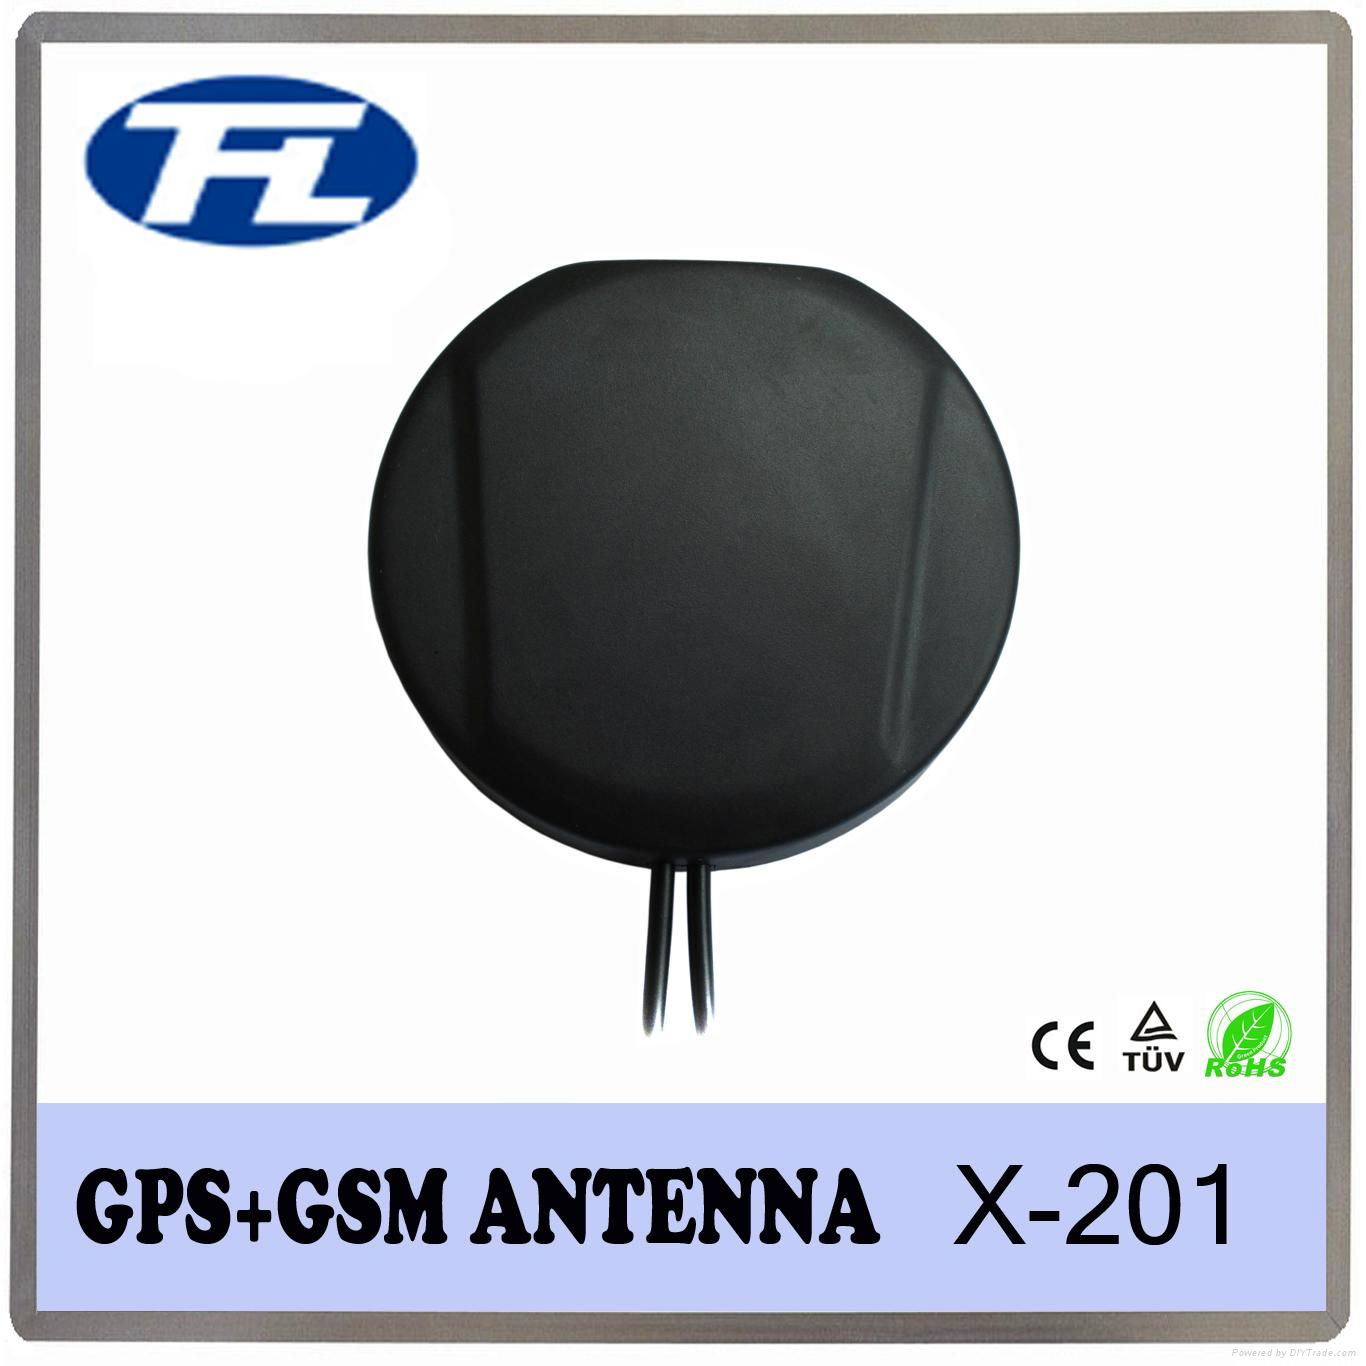 Magnet/Adhesive/Screw mount quad band GPS/GSM combination antenna 4